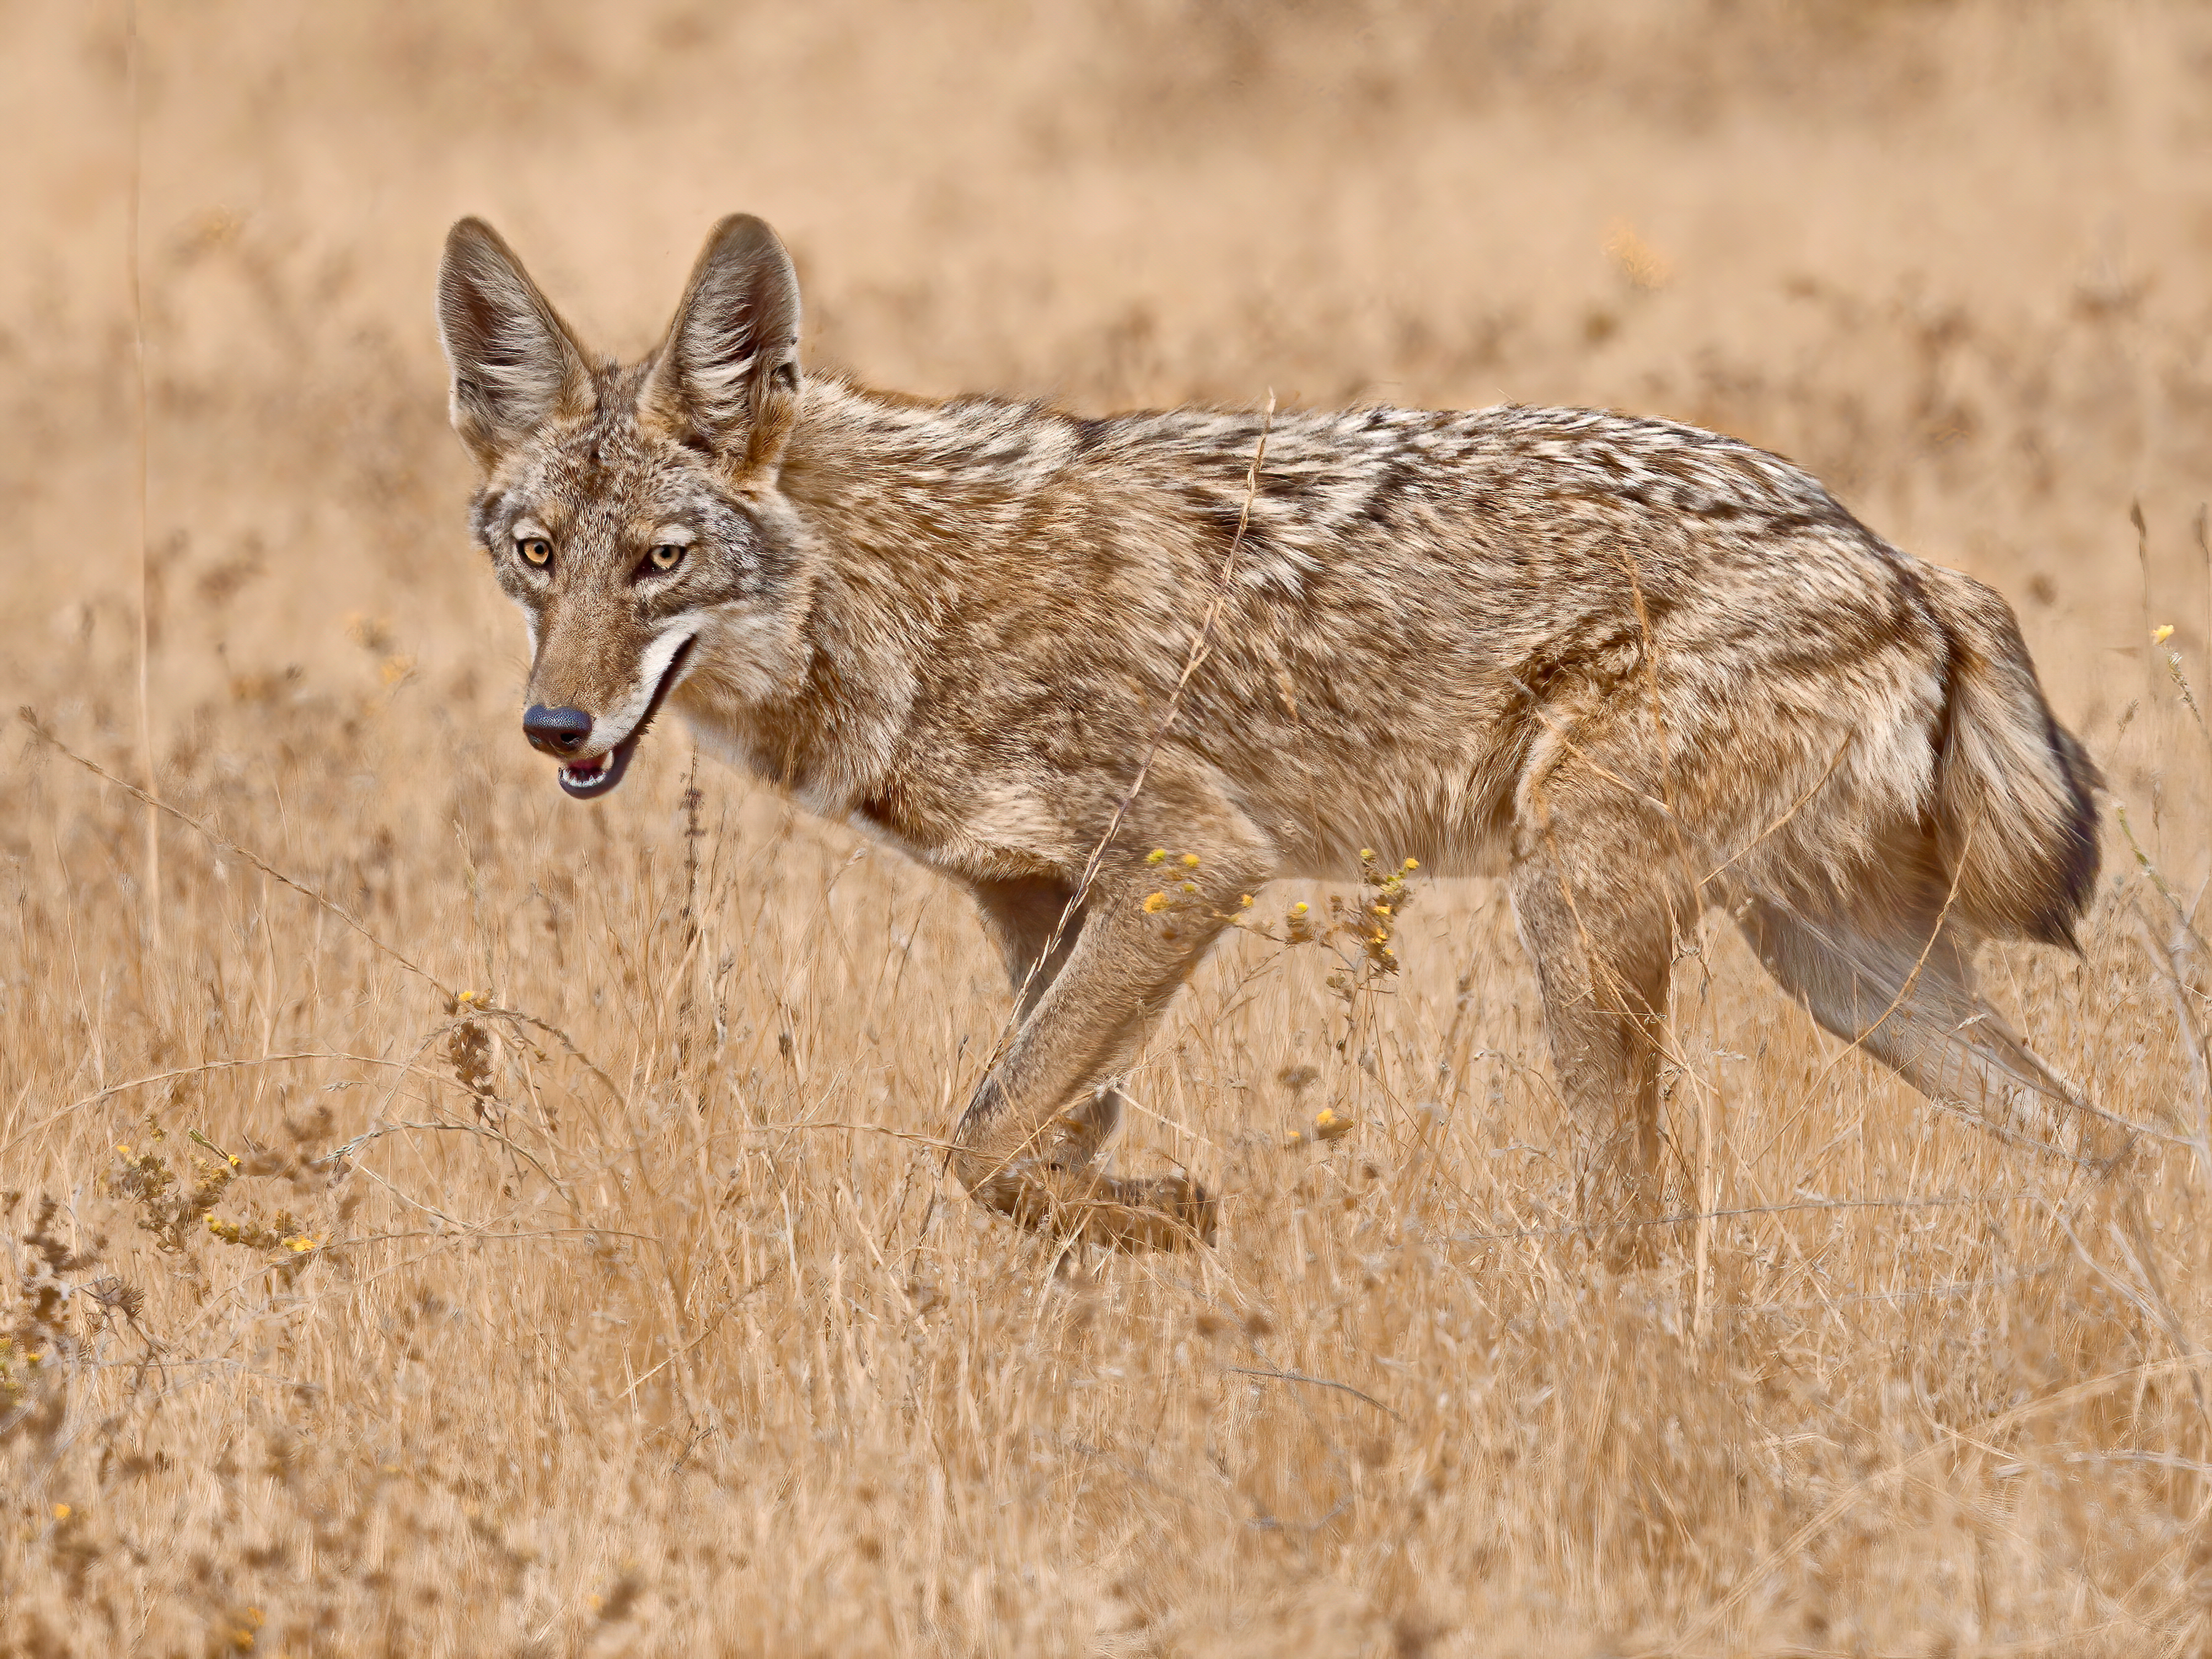 Coyote walking through a grassland.